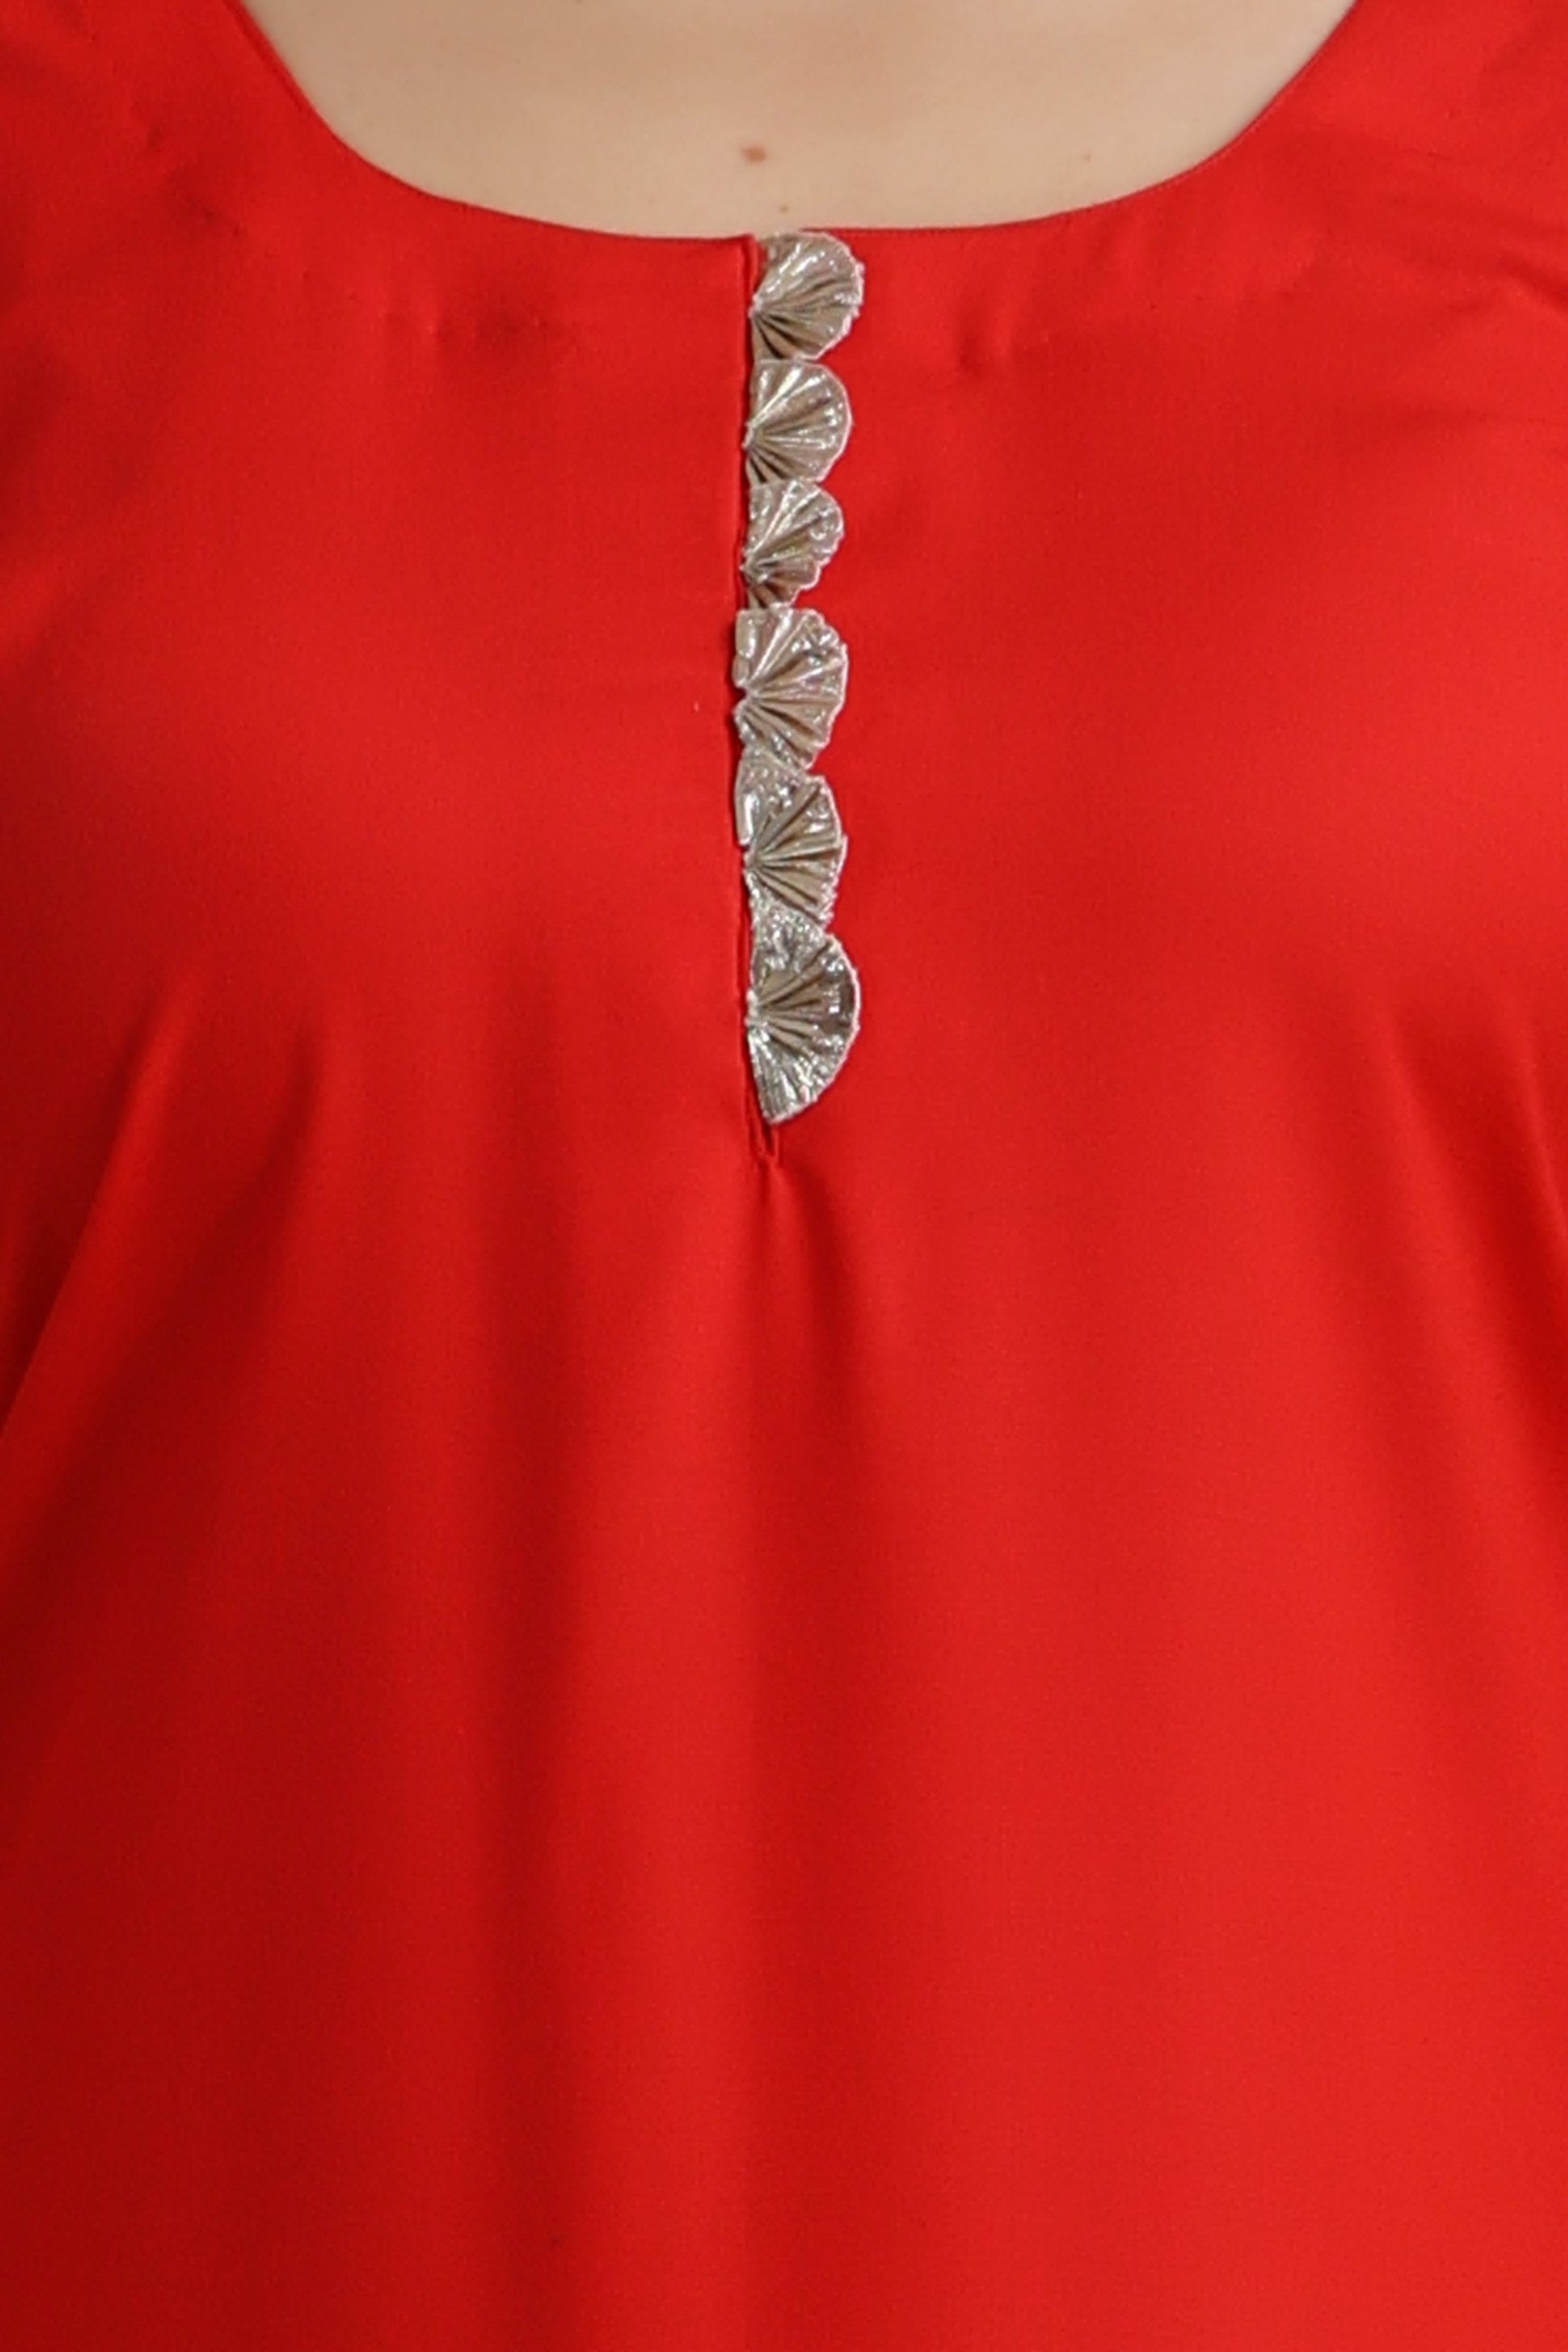 Women's Plus Size Red Party Wear Fancy Sharara Suit | Vilasata